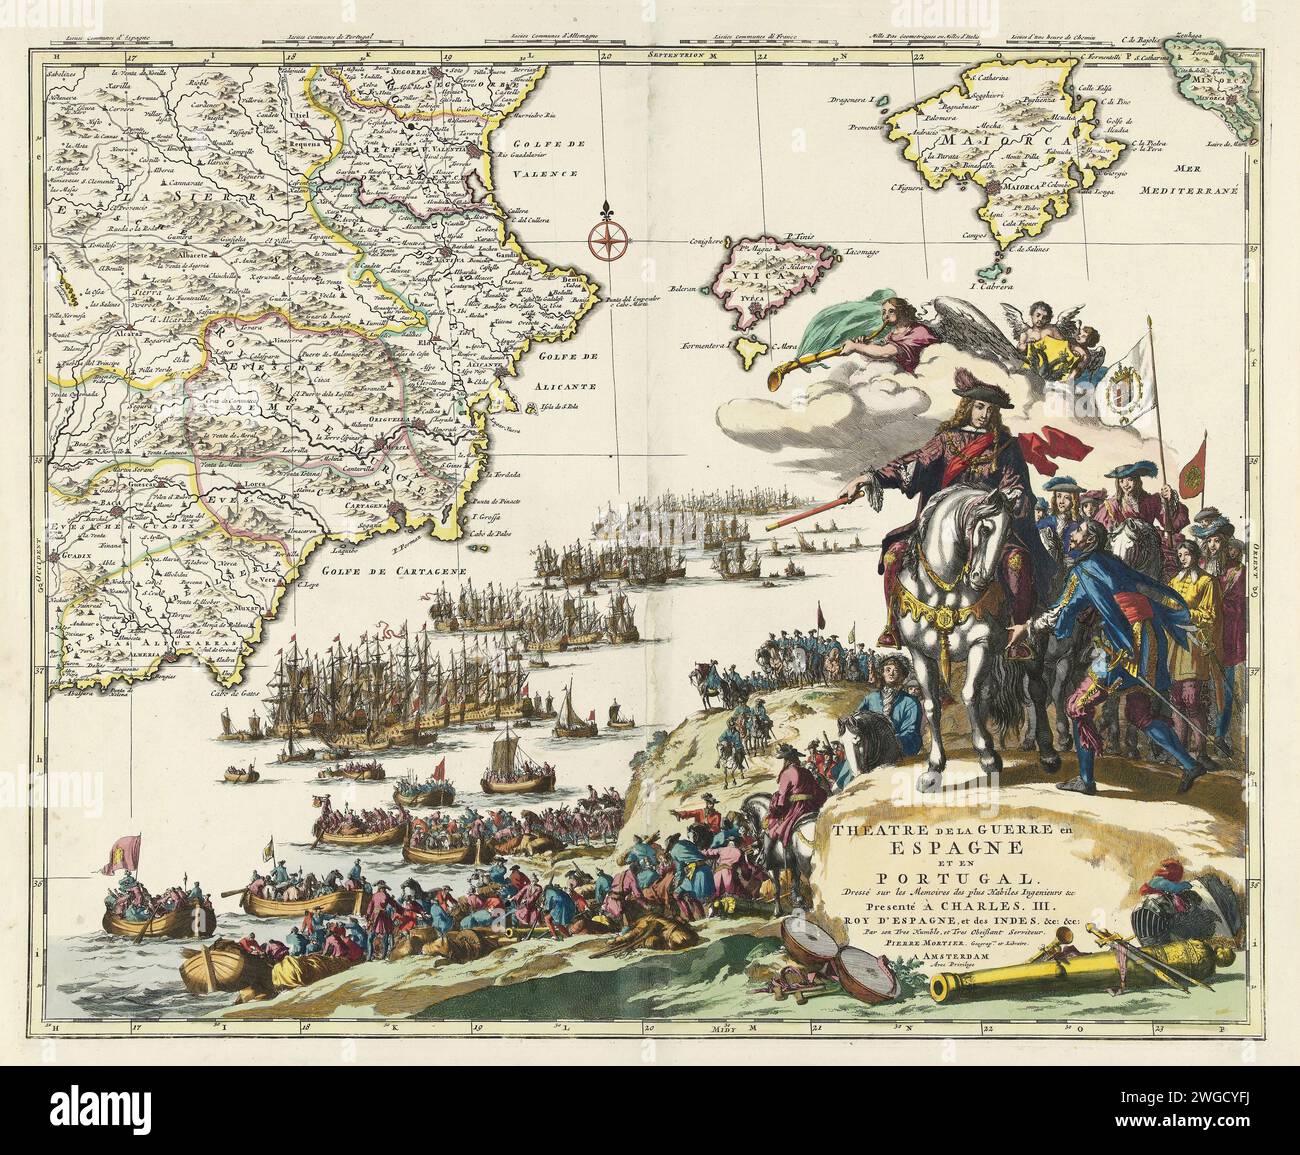 Vintage Map 'Theatre de la Guerre en Espagne et en Portugal', illustrating the fields of battles in Spain and Portugal.  print maker Jan Luyken, 1703 Stock Photo